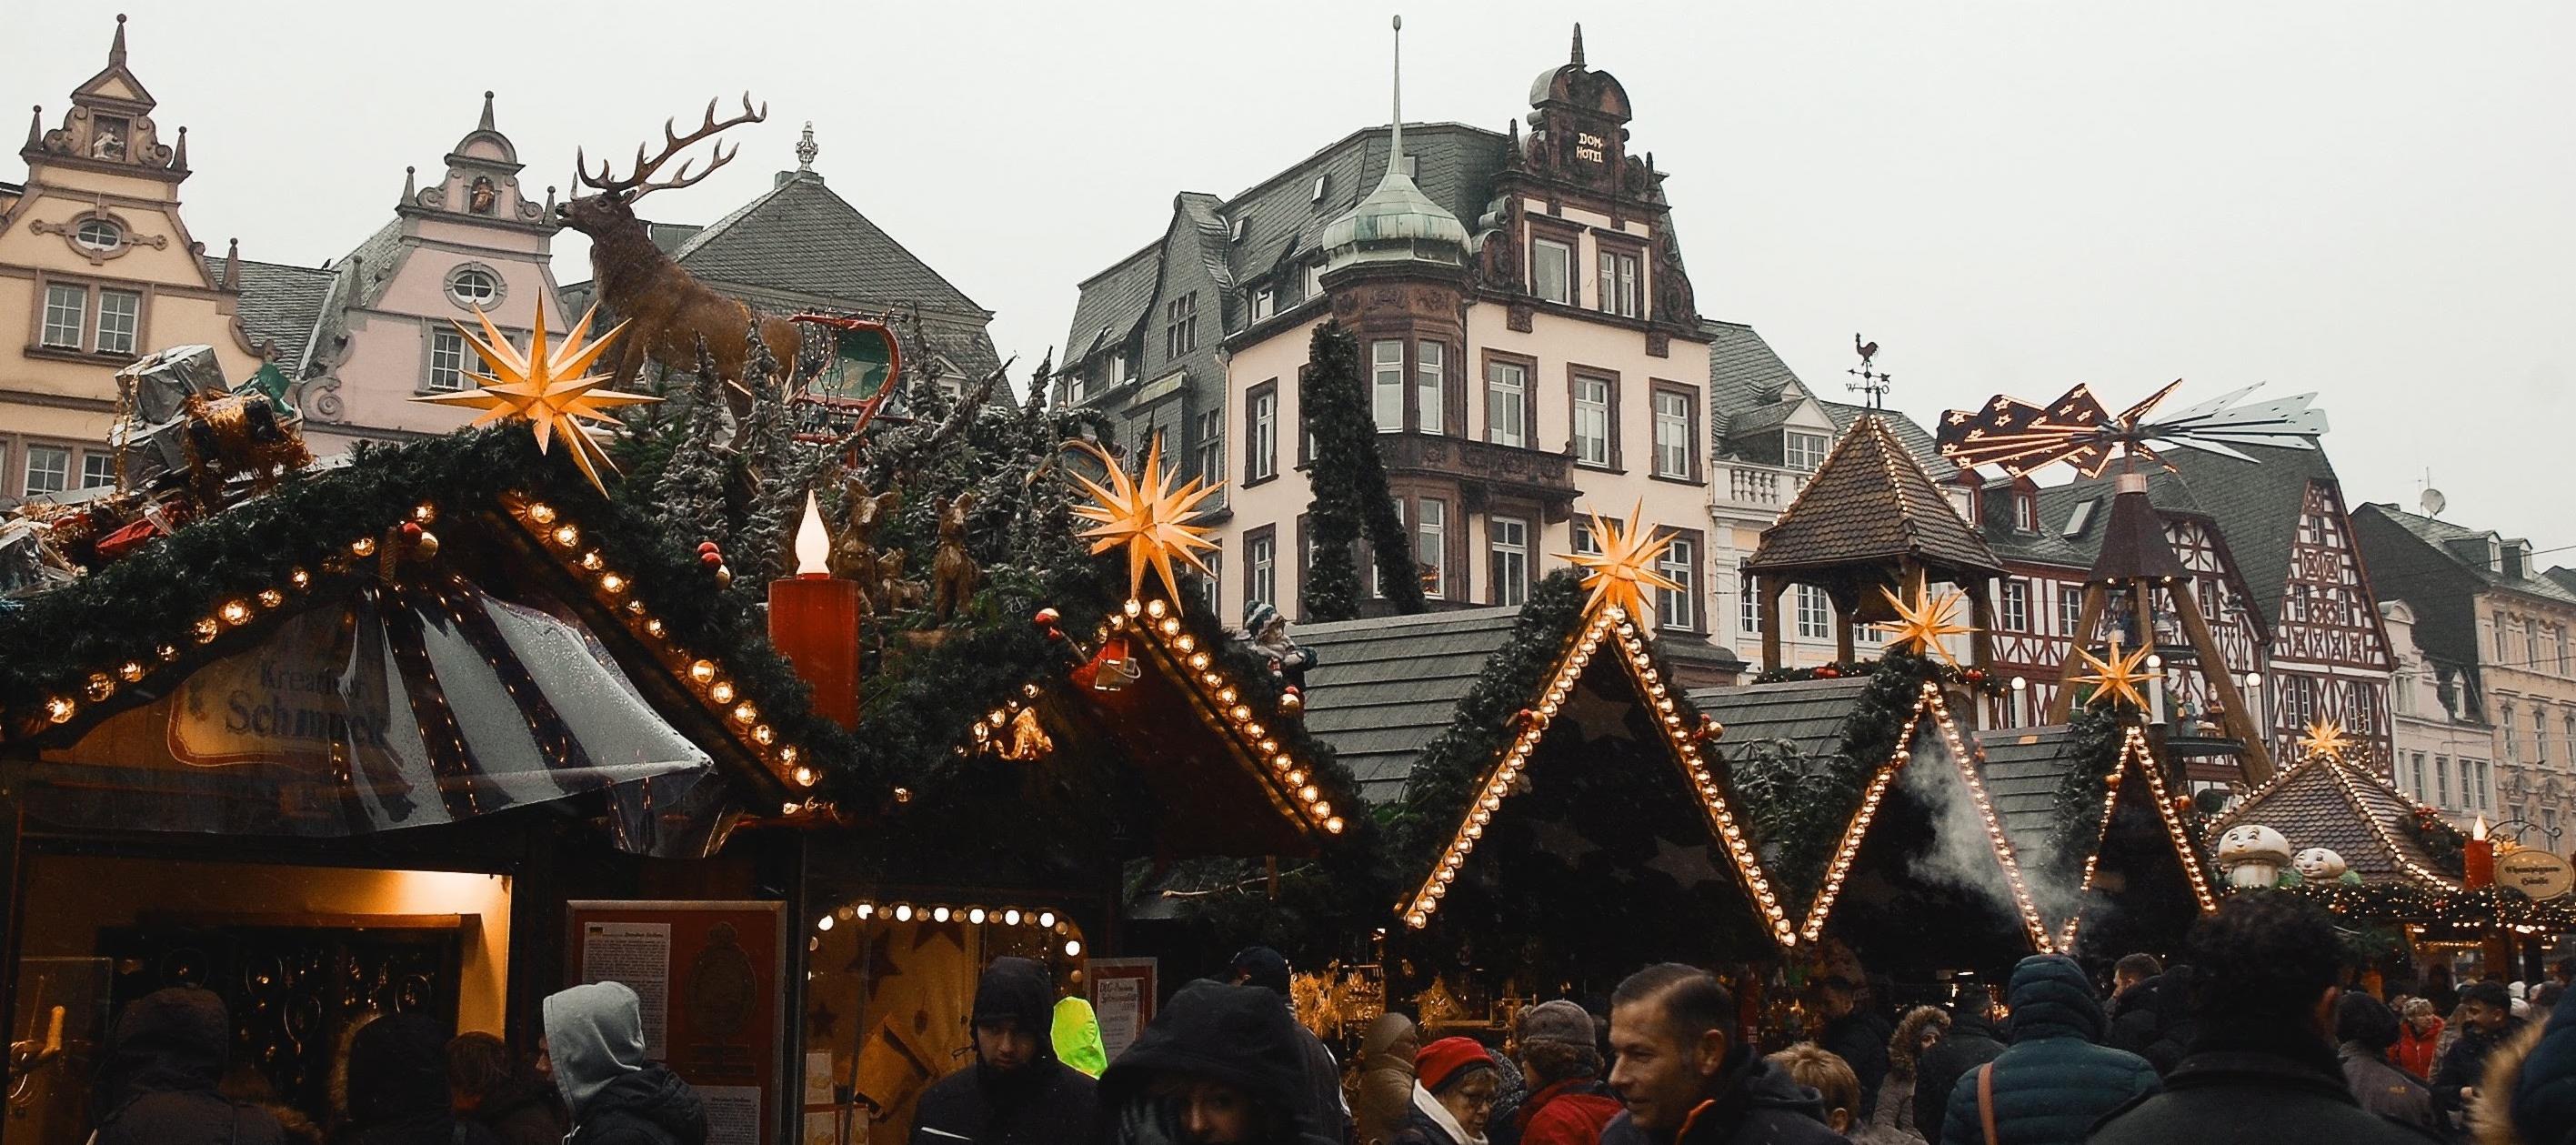 Top 5 European Christmas Markets to Visit